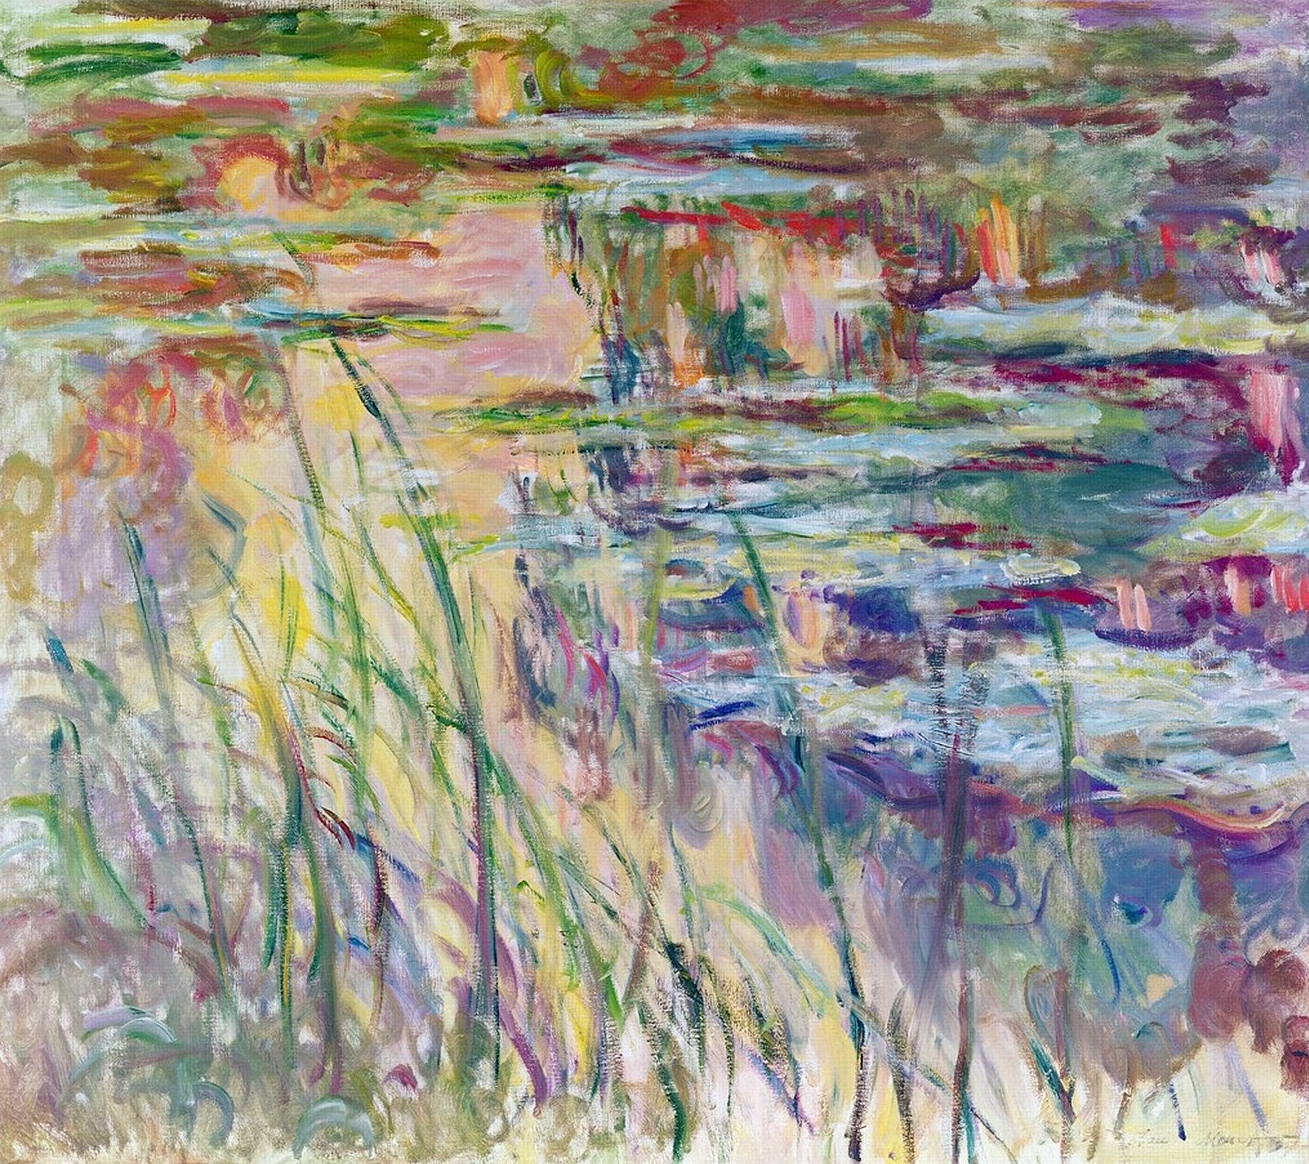 Claude+Monet-1840-1926 (548).jpg